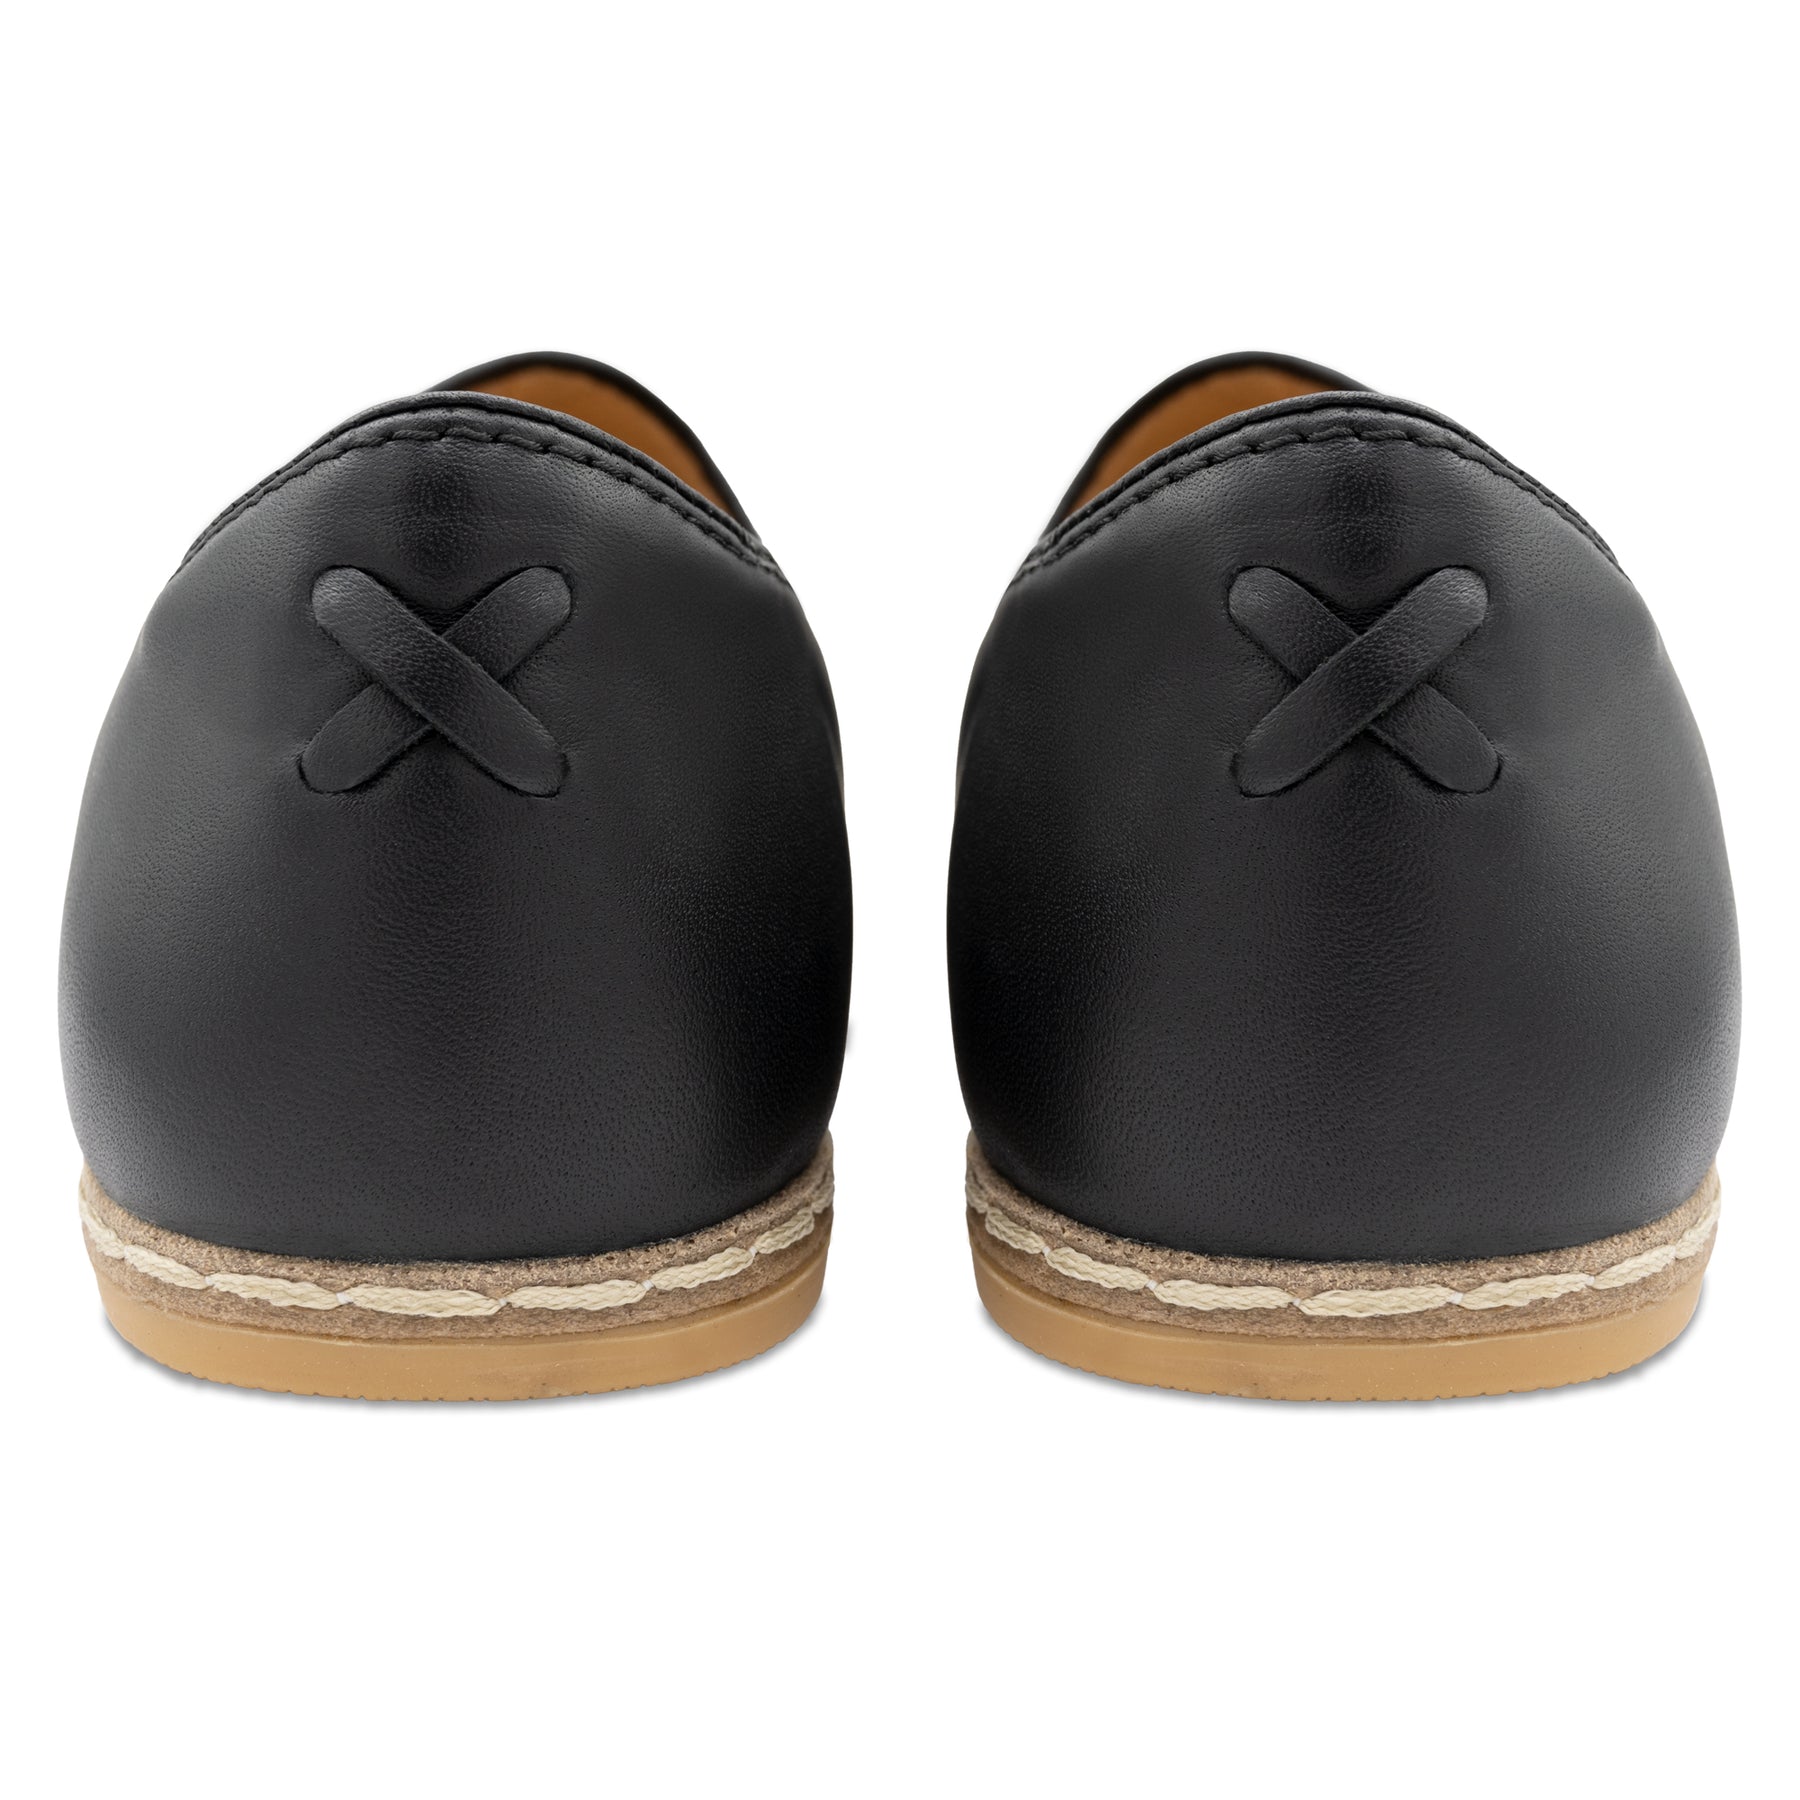 Black Slip On Shoes - Charix Shoes